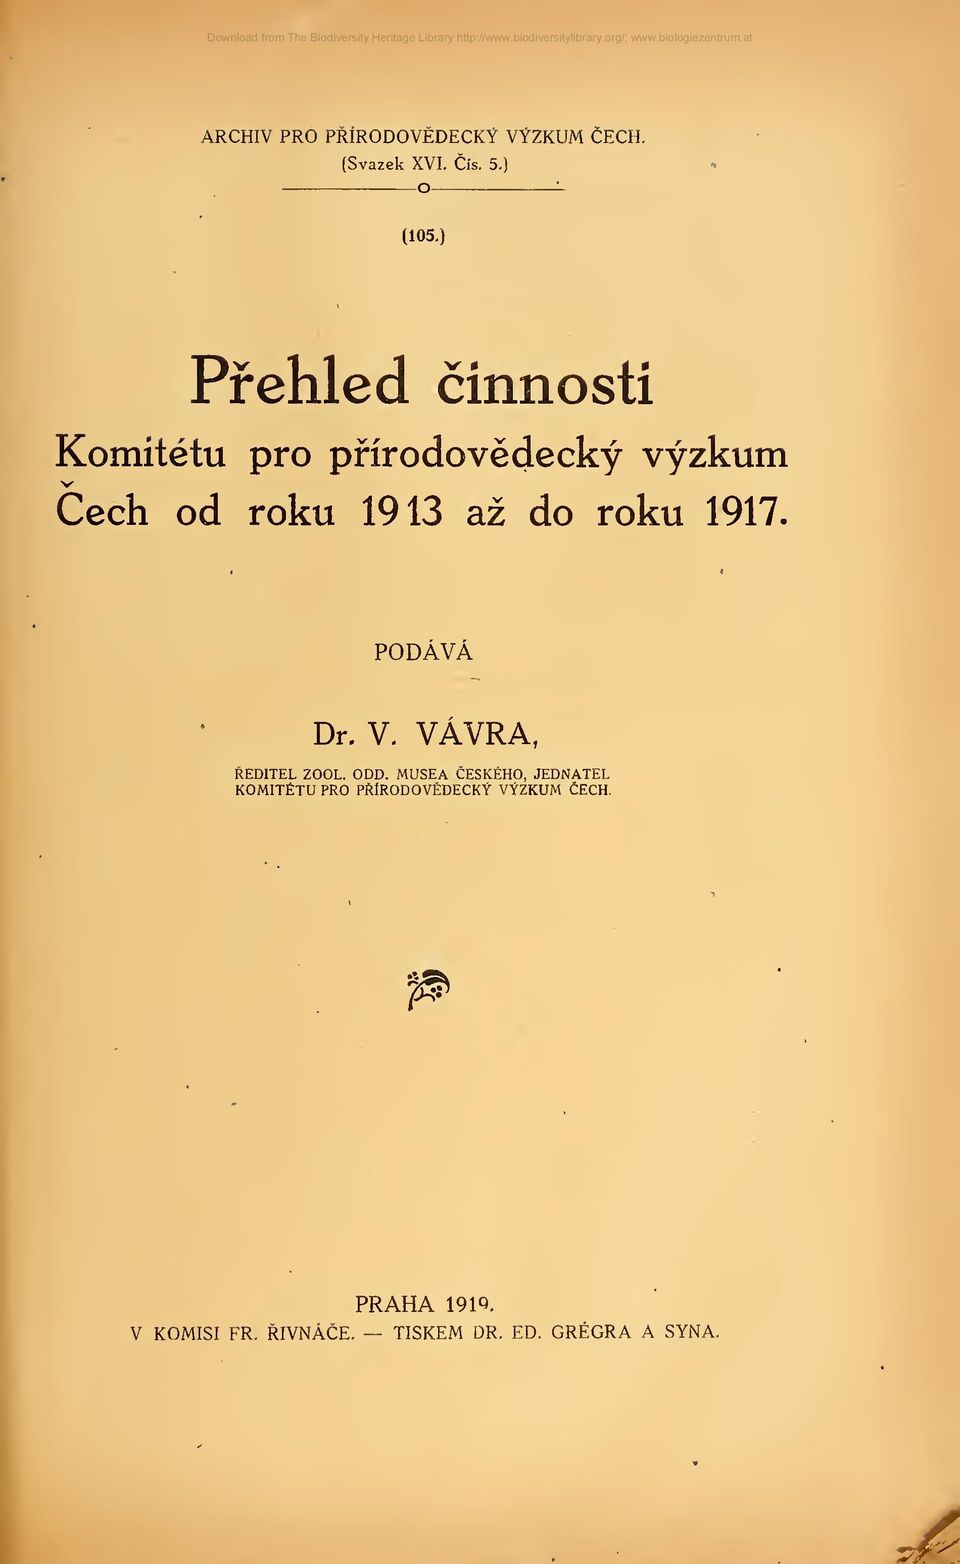 ) Pfehled cinnosti Komitetu pro pfirodovedecky vyzkum V Cech od roku 1913 az do roku 1917. PODÄVÄ Dr. V. VÄVRA, REDITEL ZOOL.